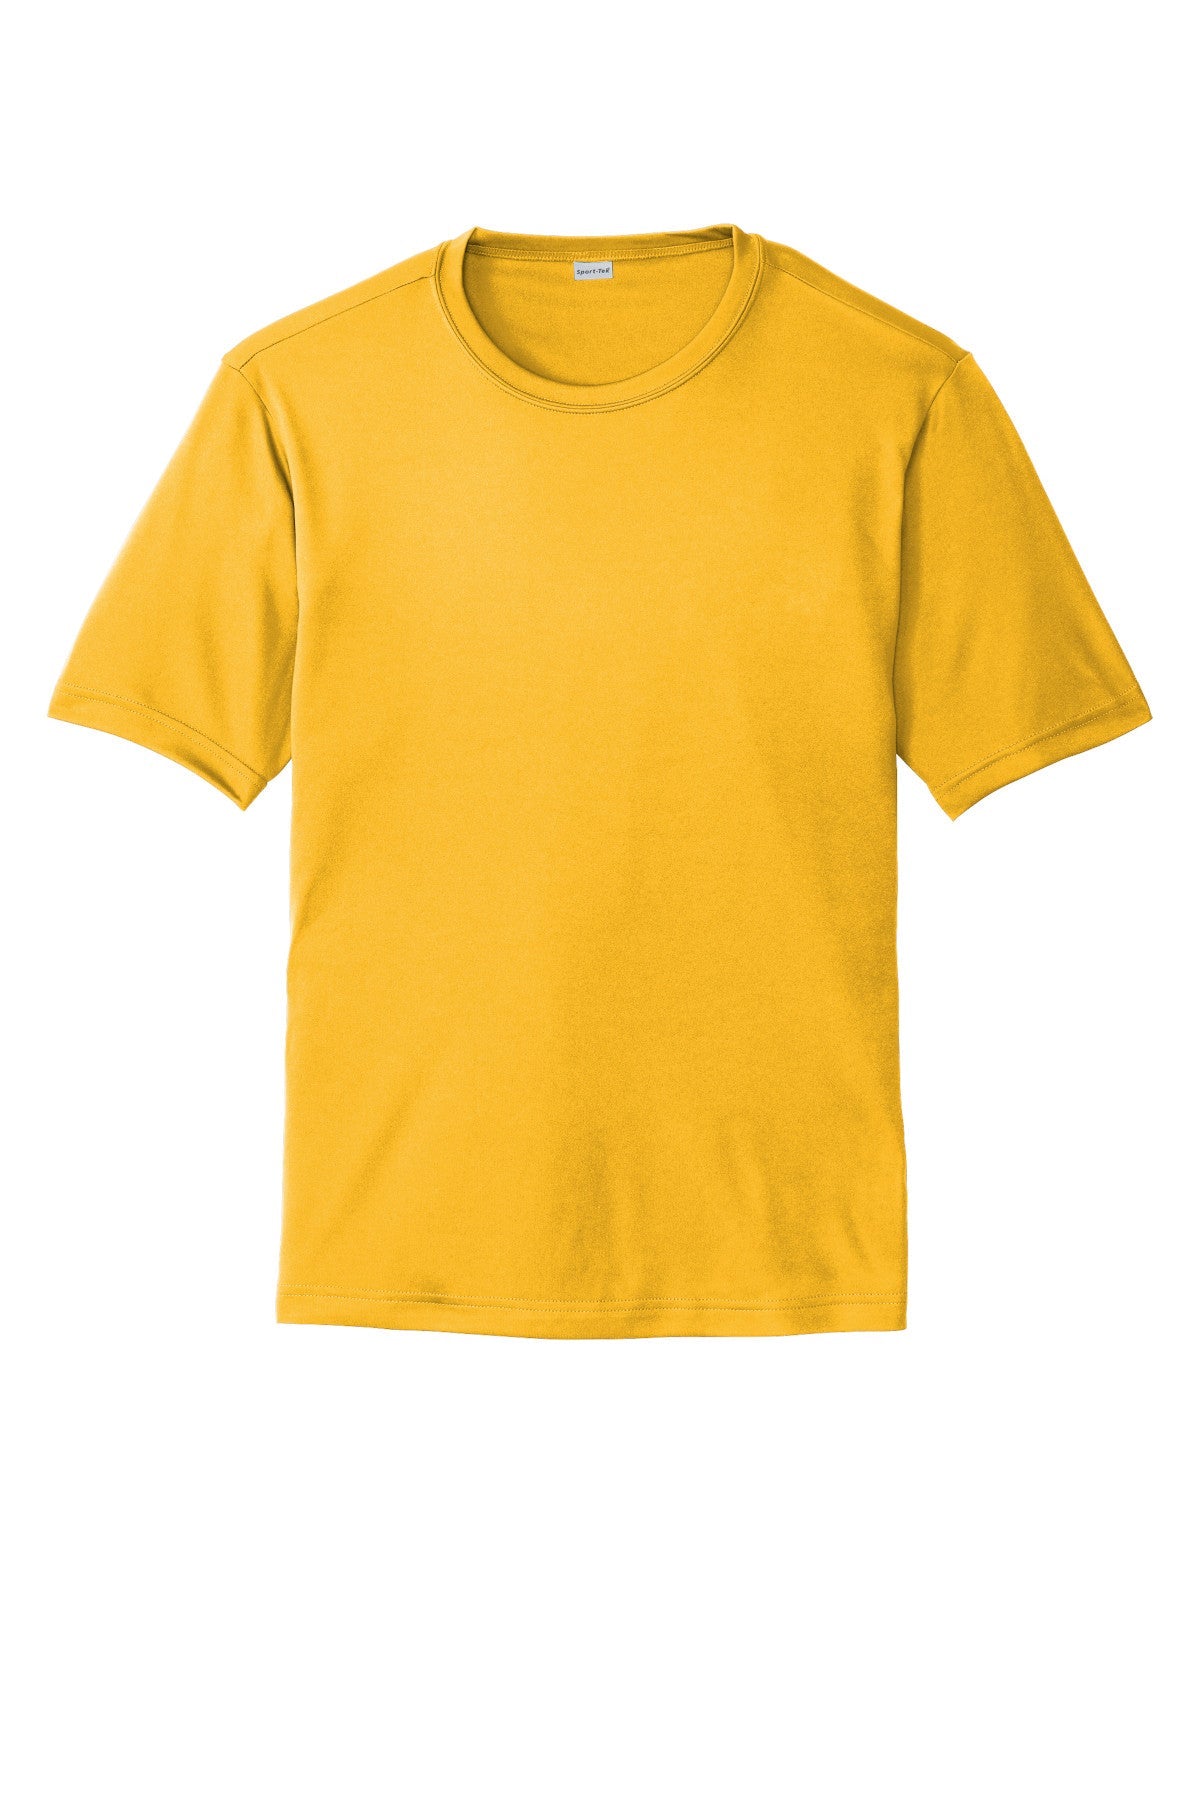 Sport-Tek Yst350 Polyester Youth T-Shirt Yth Small / Gold